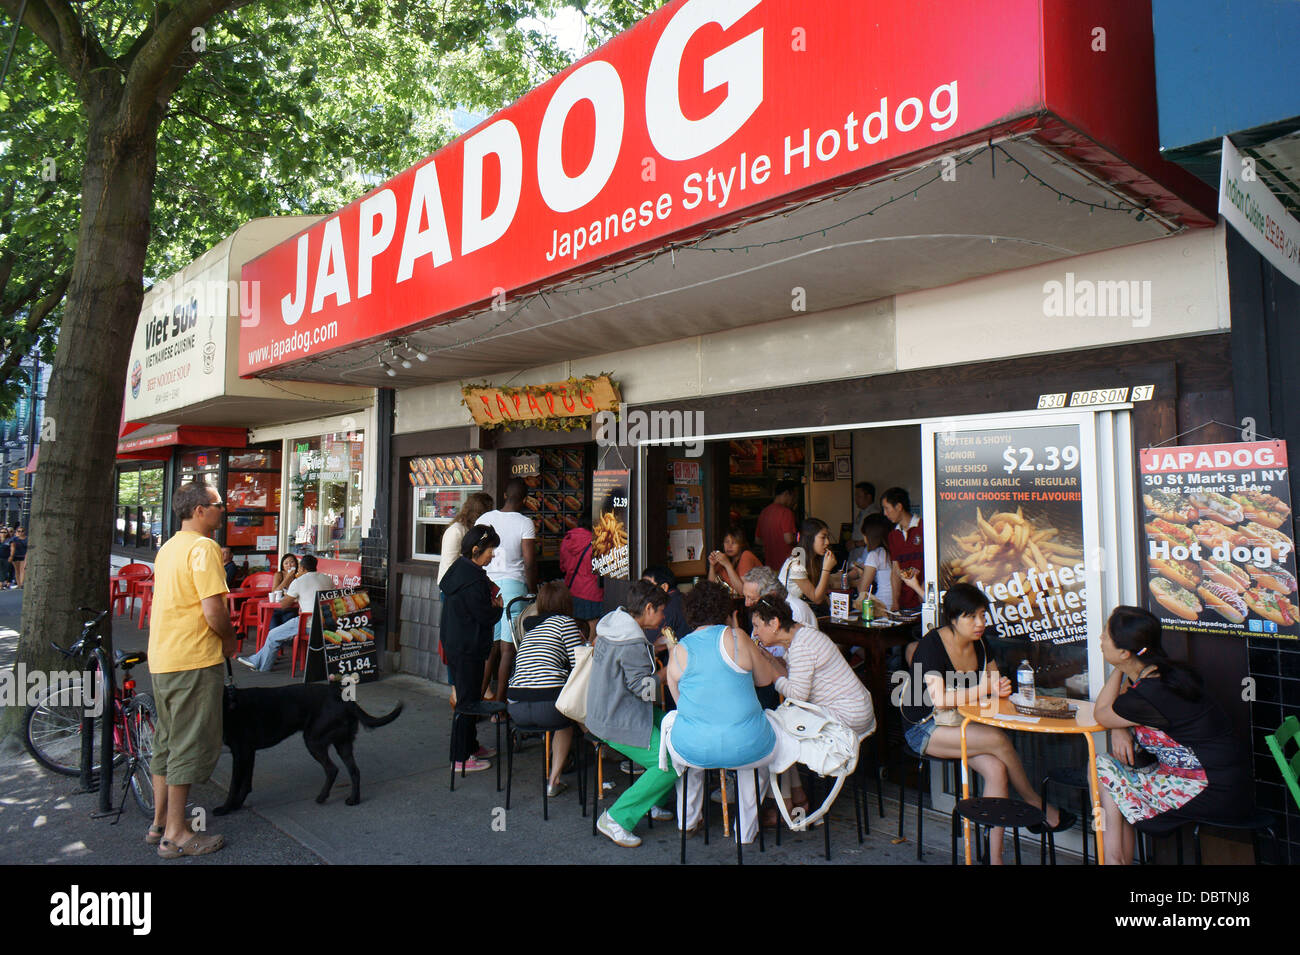 Japadog Japanese style hotdog Restaurant on Robson Street, Vancouver, BC, Canada Stock Photo